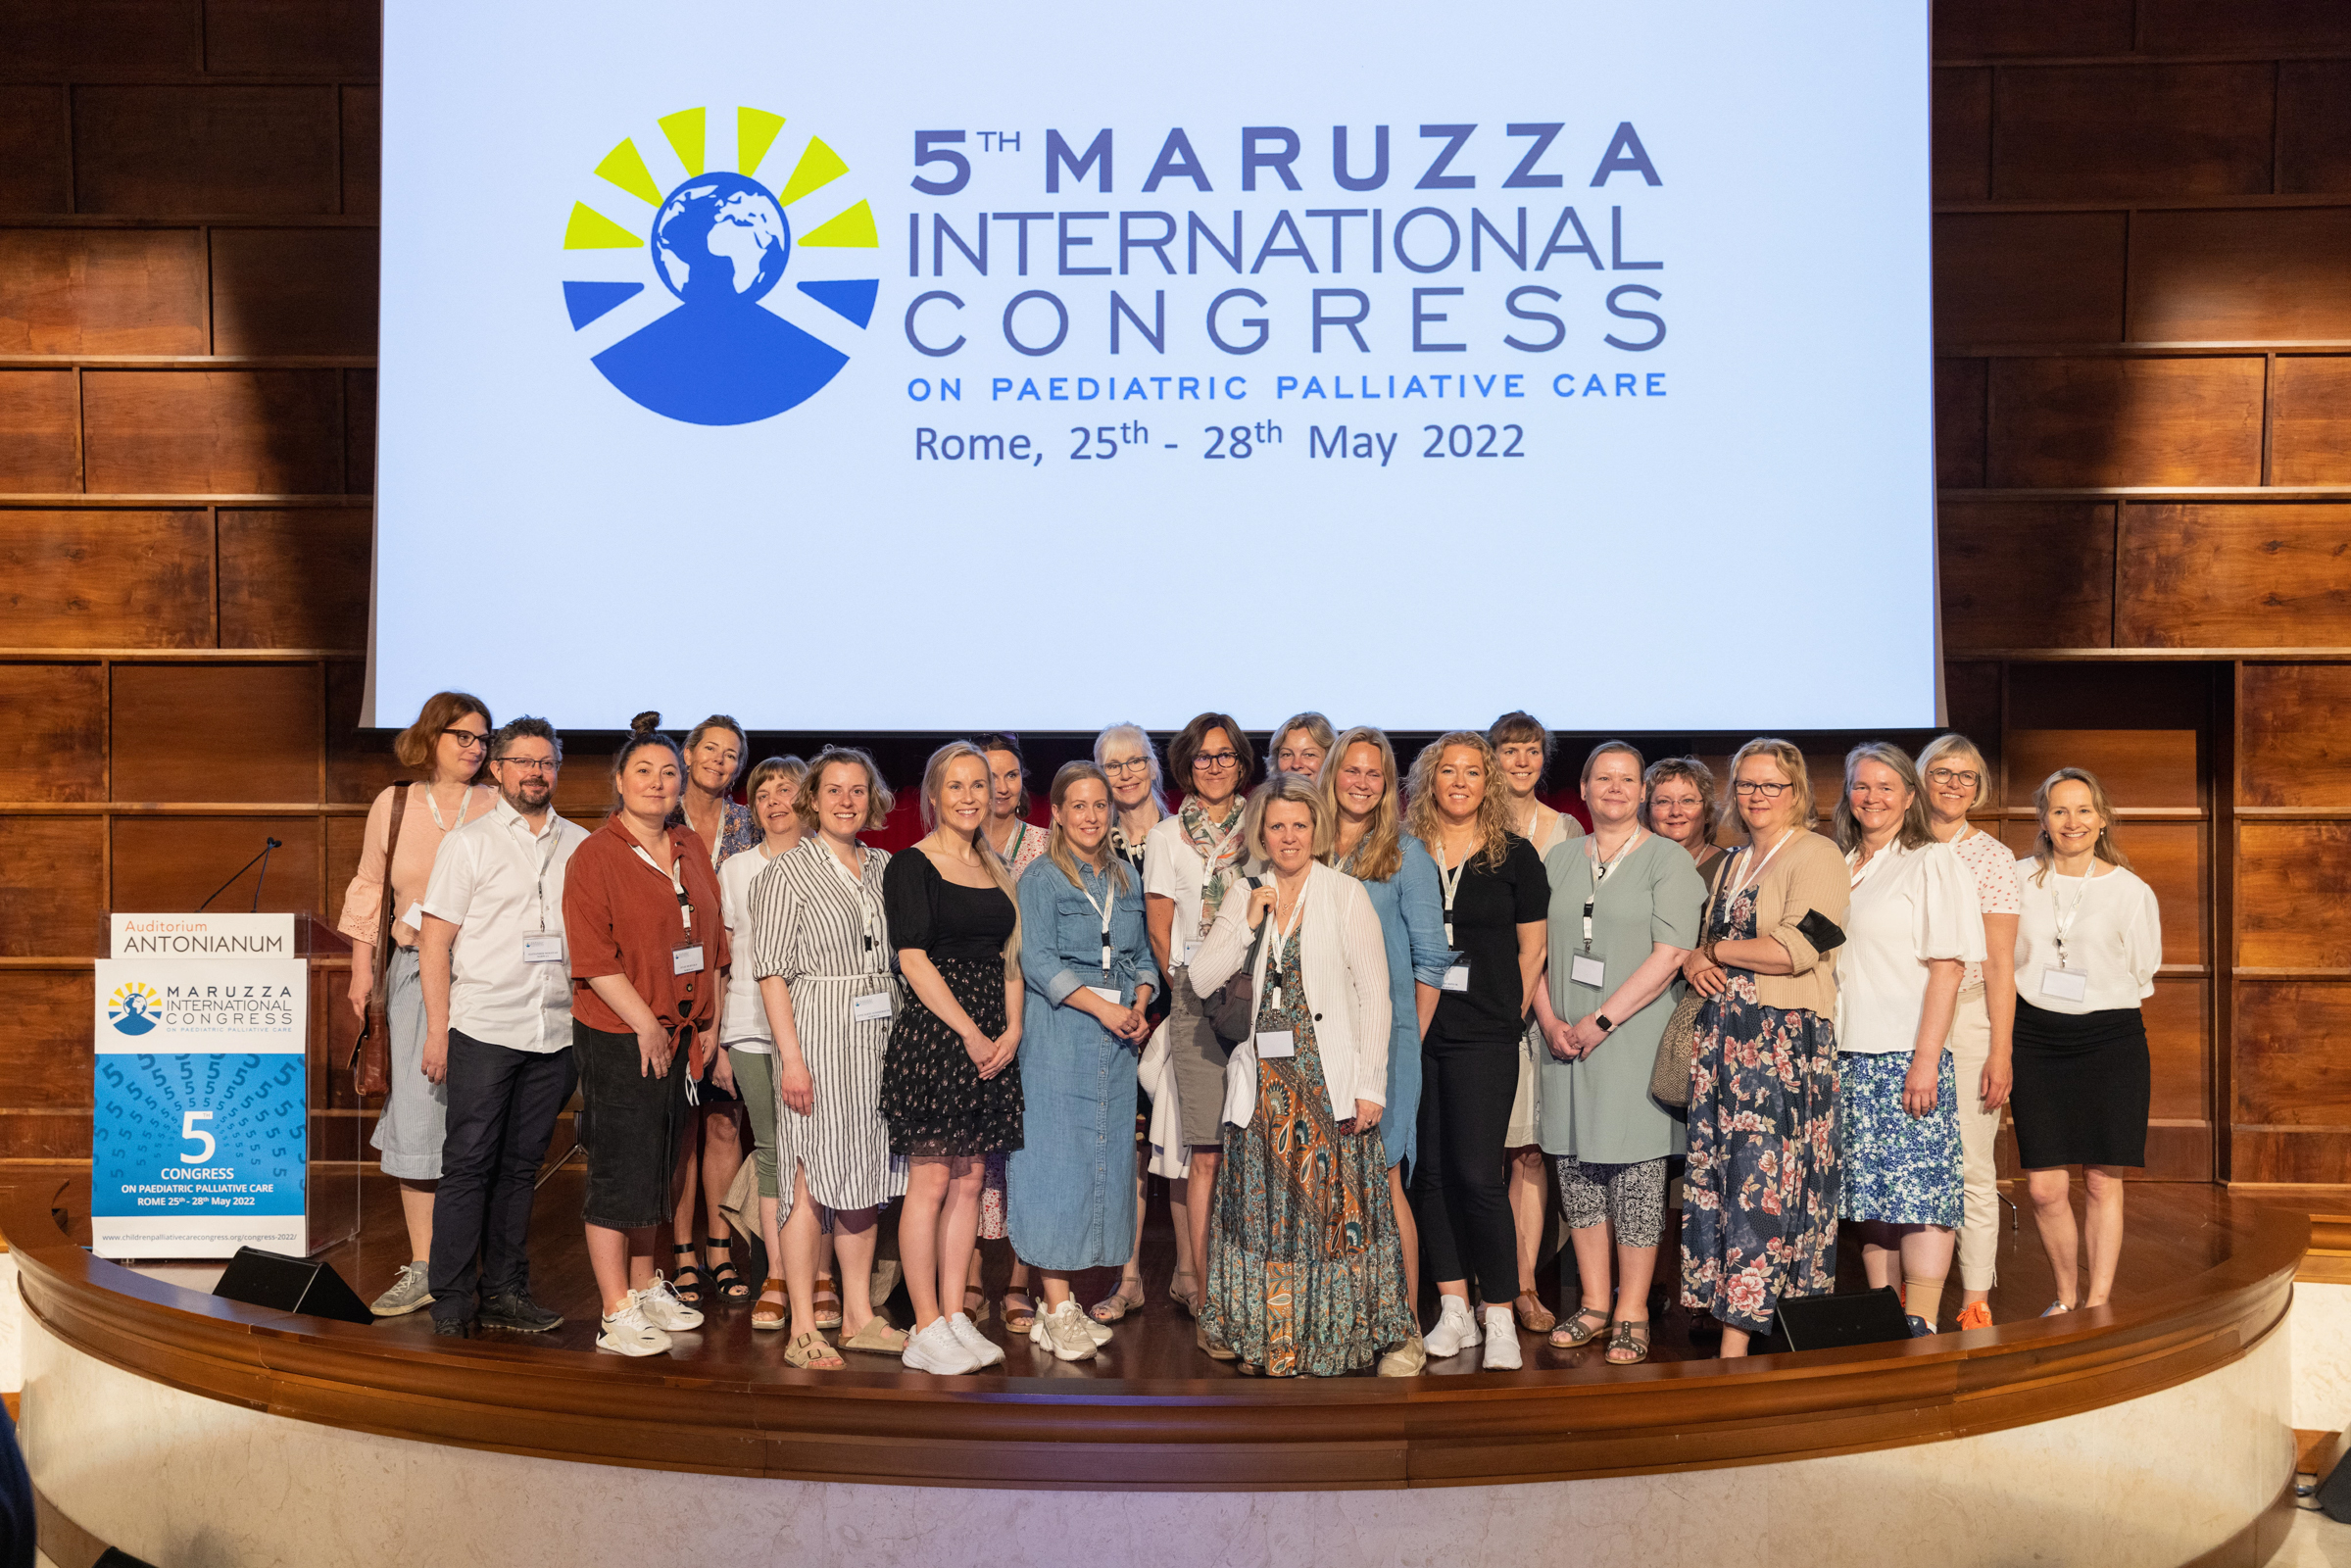 Featured image for “5th Maruzza International Congress on Paediatric Palliative Care”